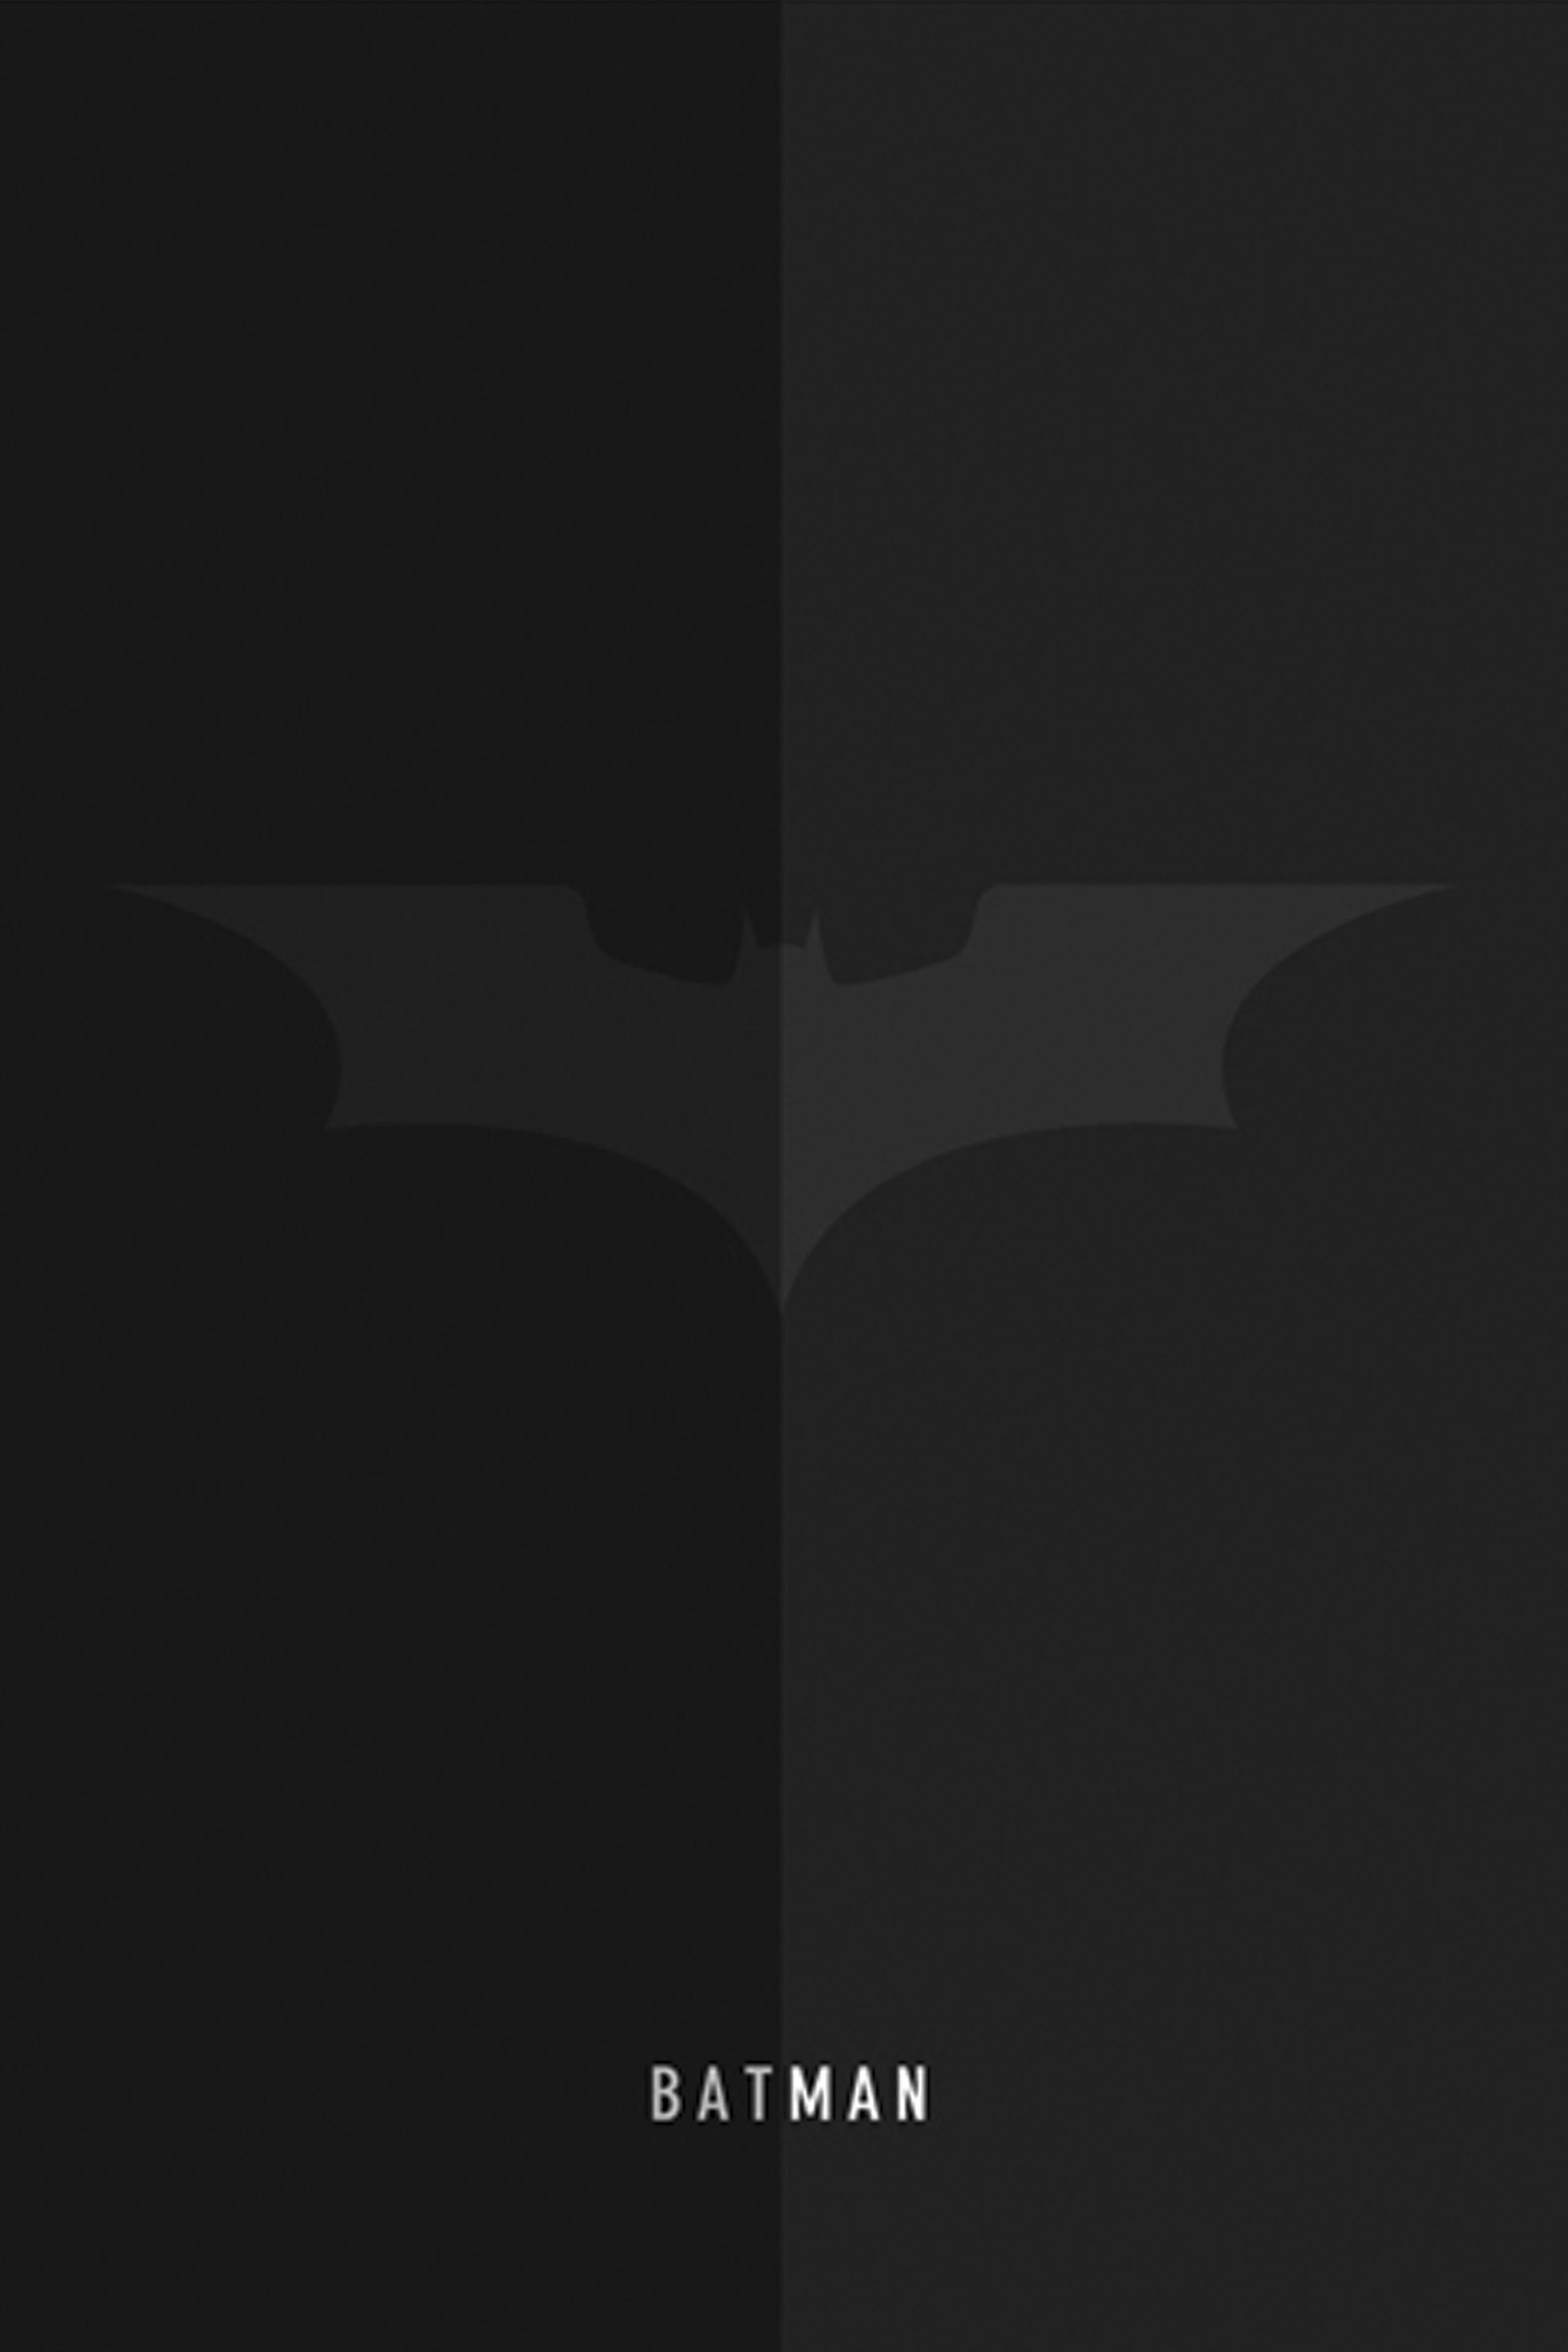 batman mobile wallpaper minimalist 2560x3840. Batman wallpaper